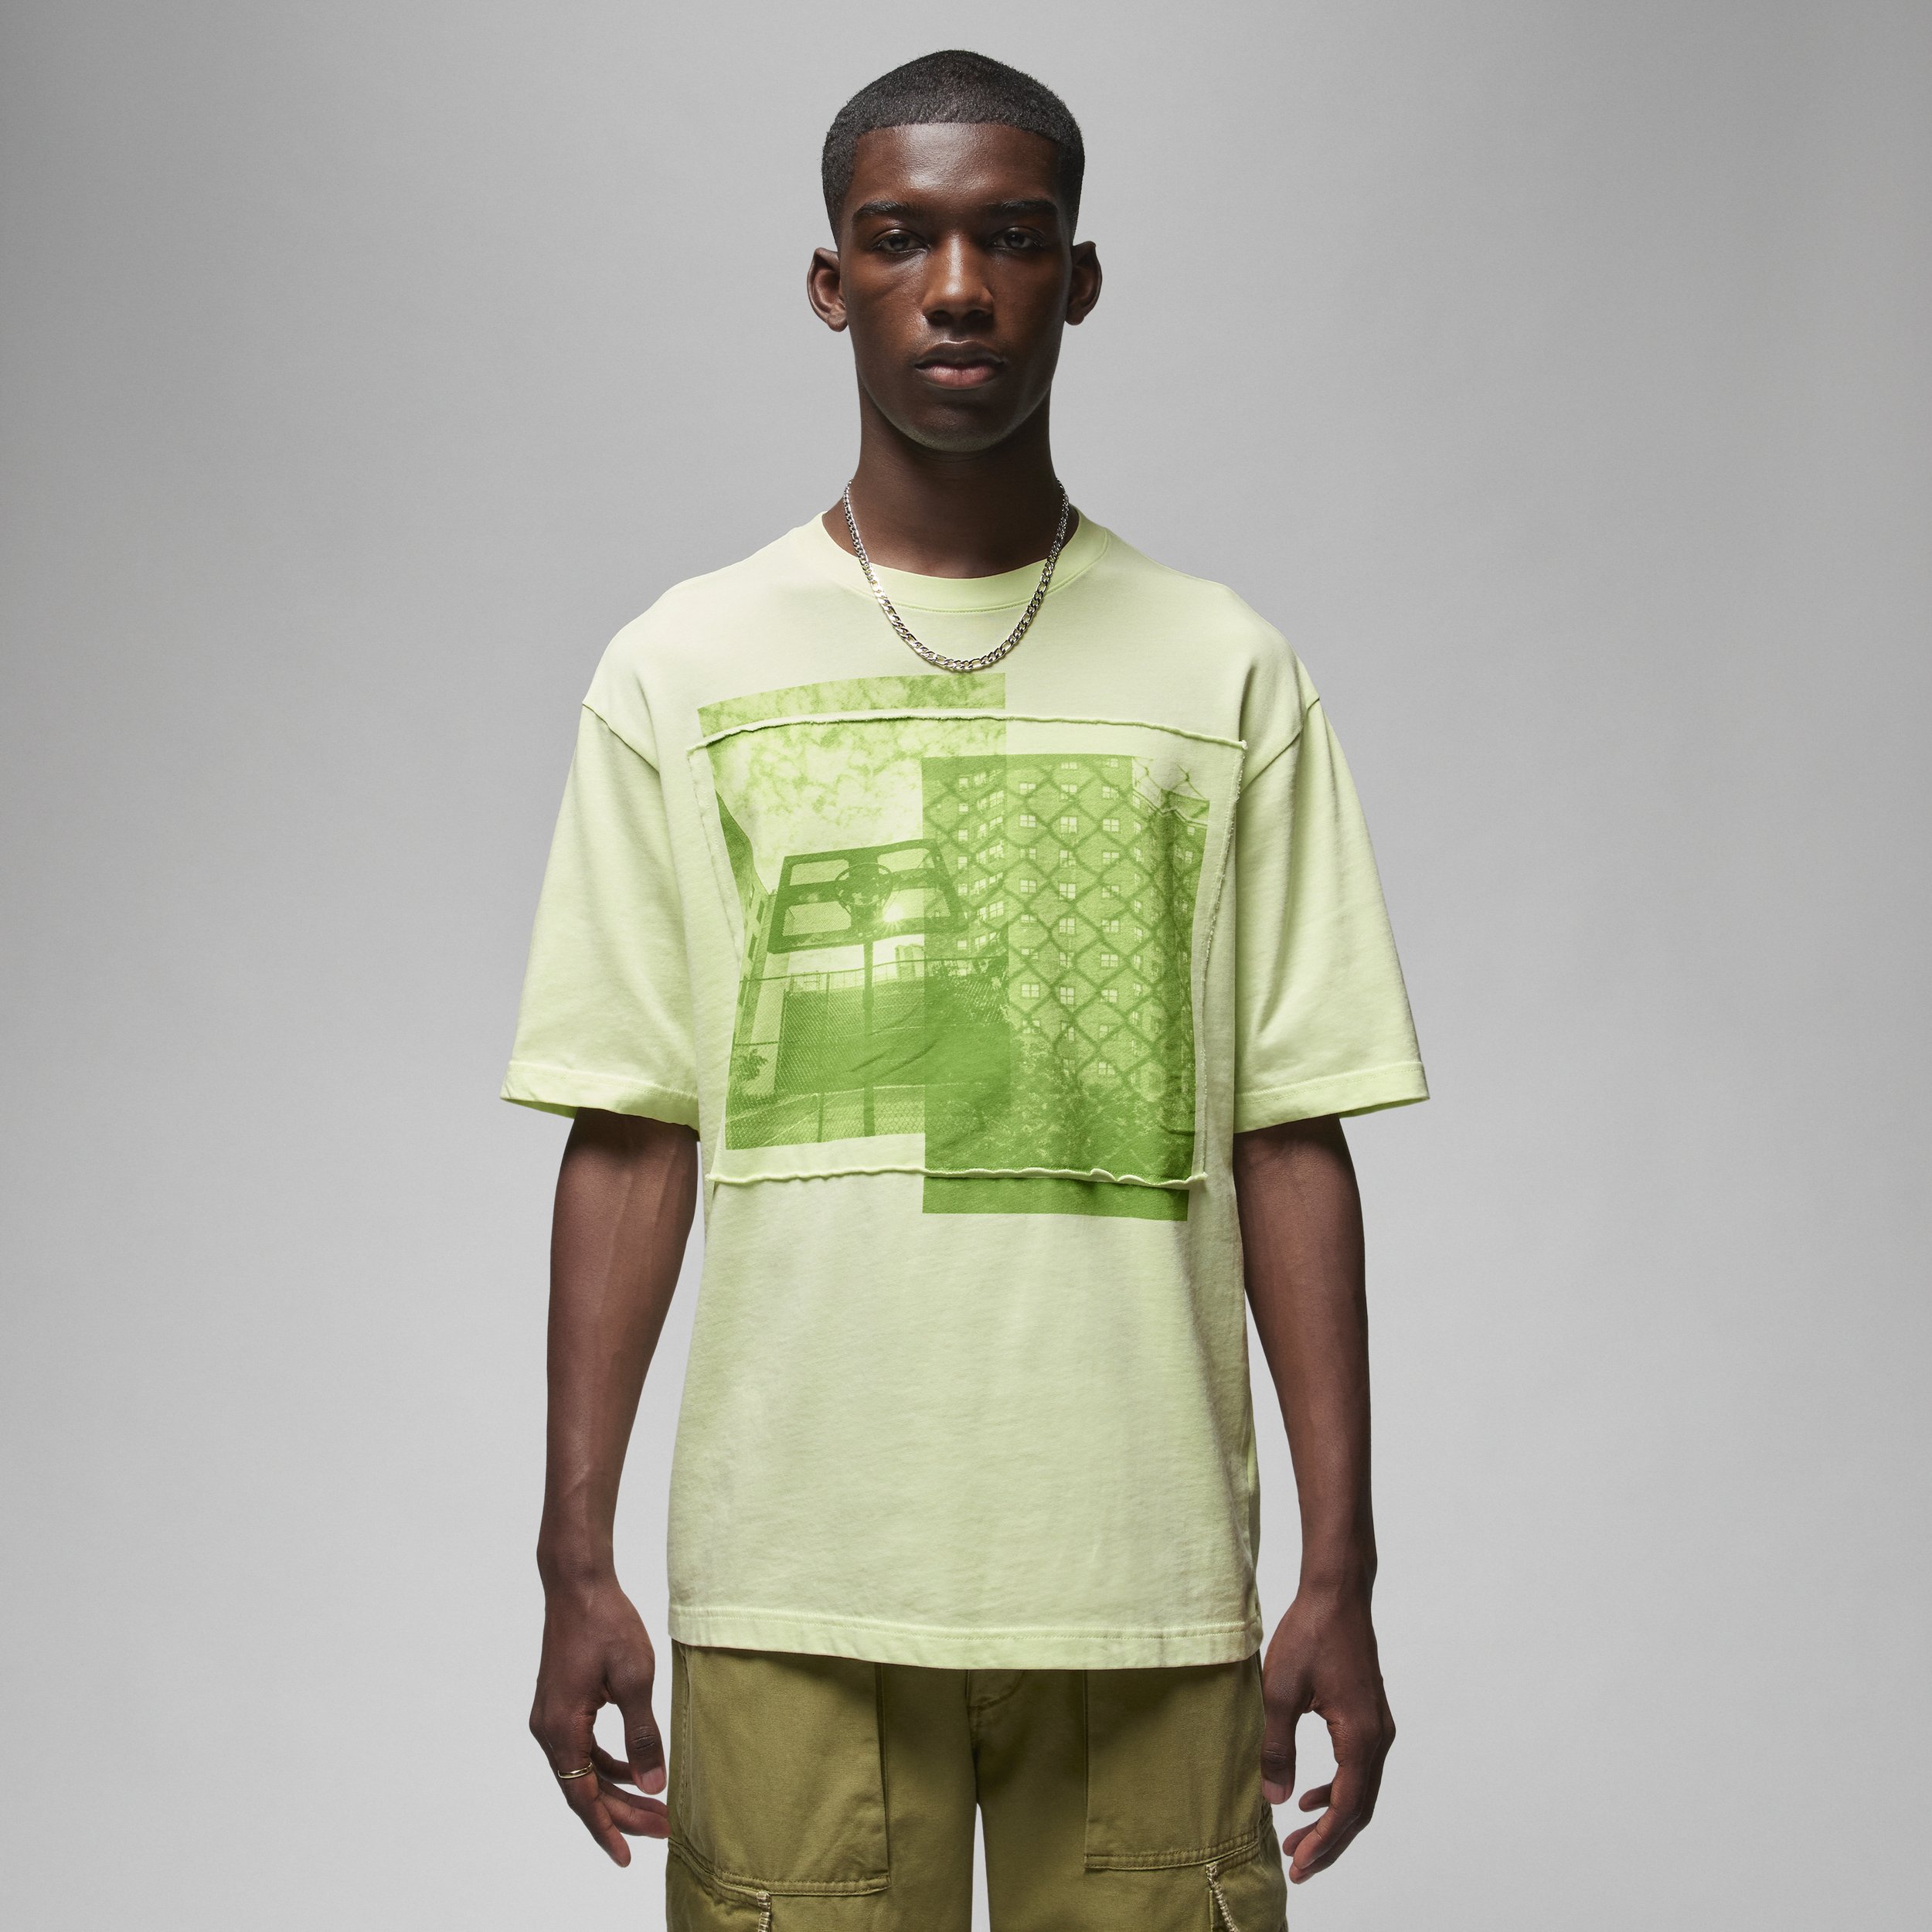 Jordan x UNION x Bephies Beauty Supply-T-shirt til mænd - grøn